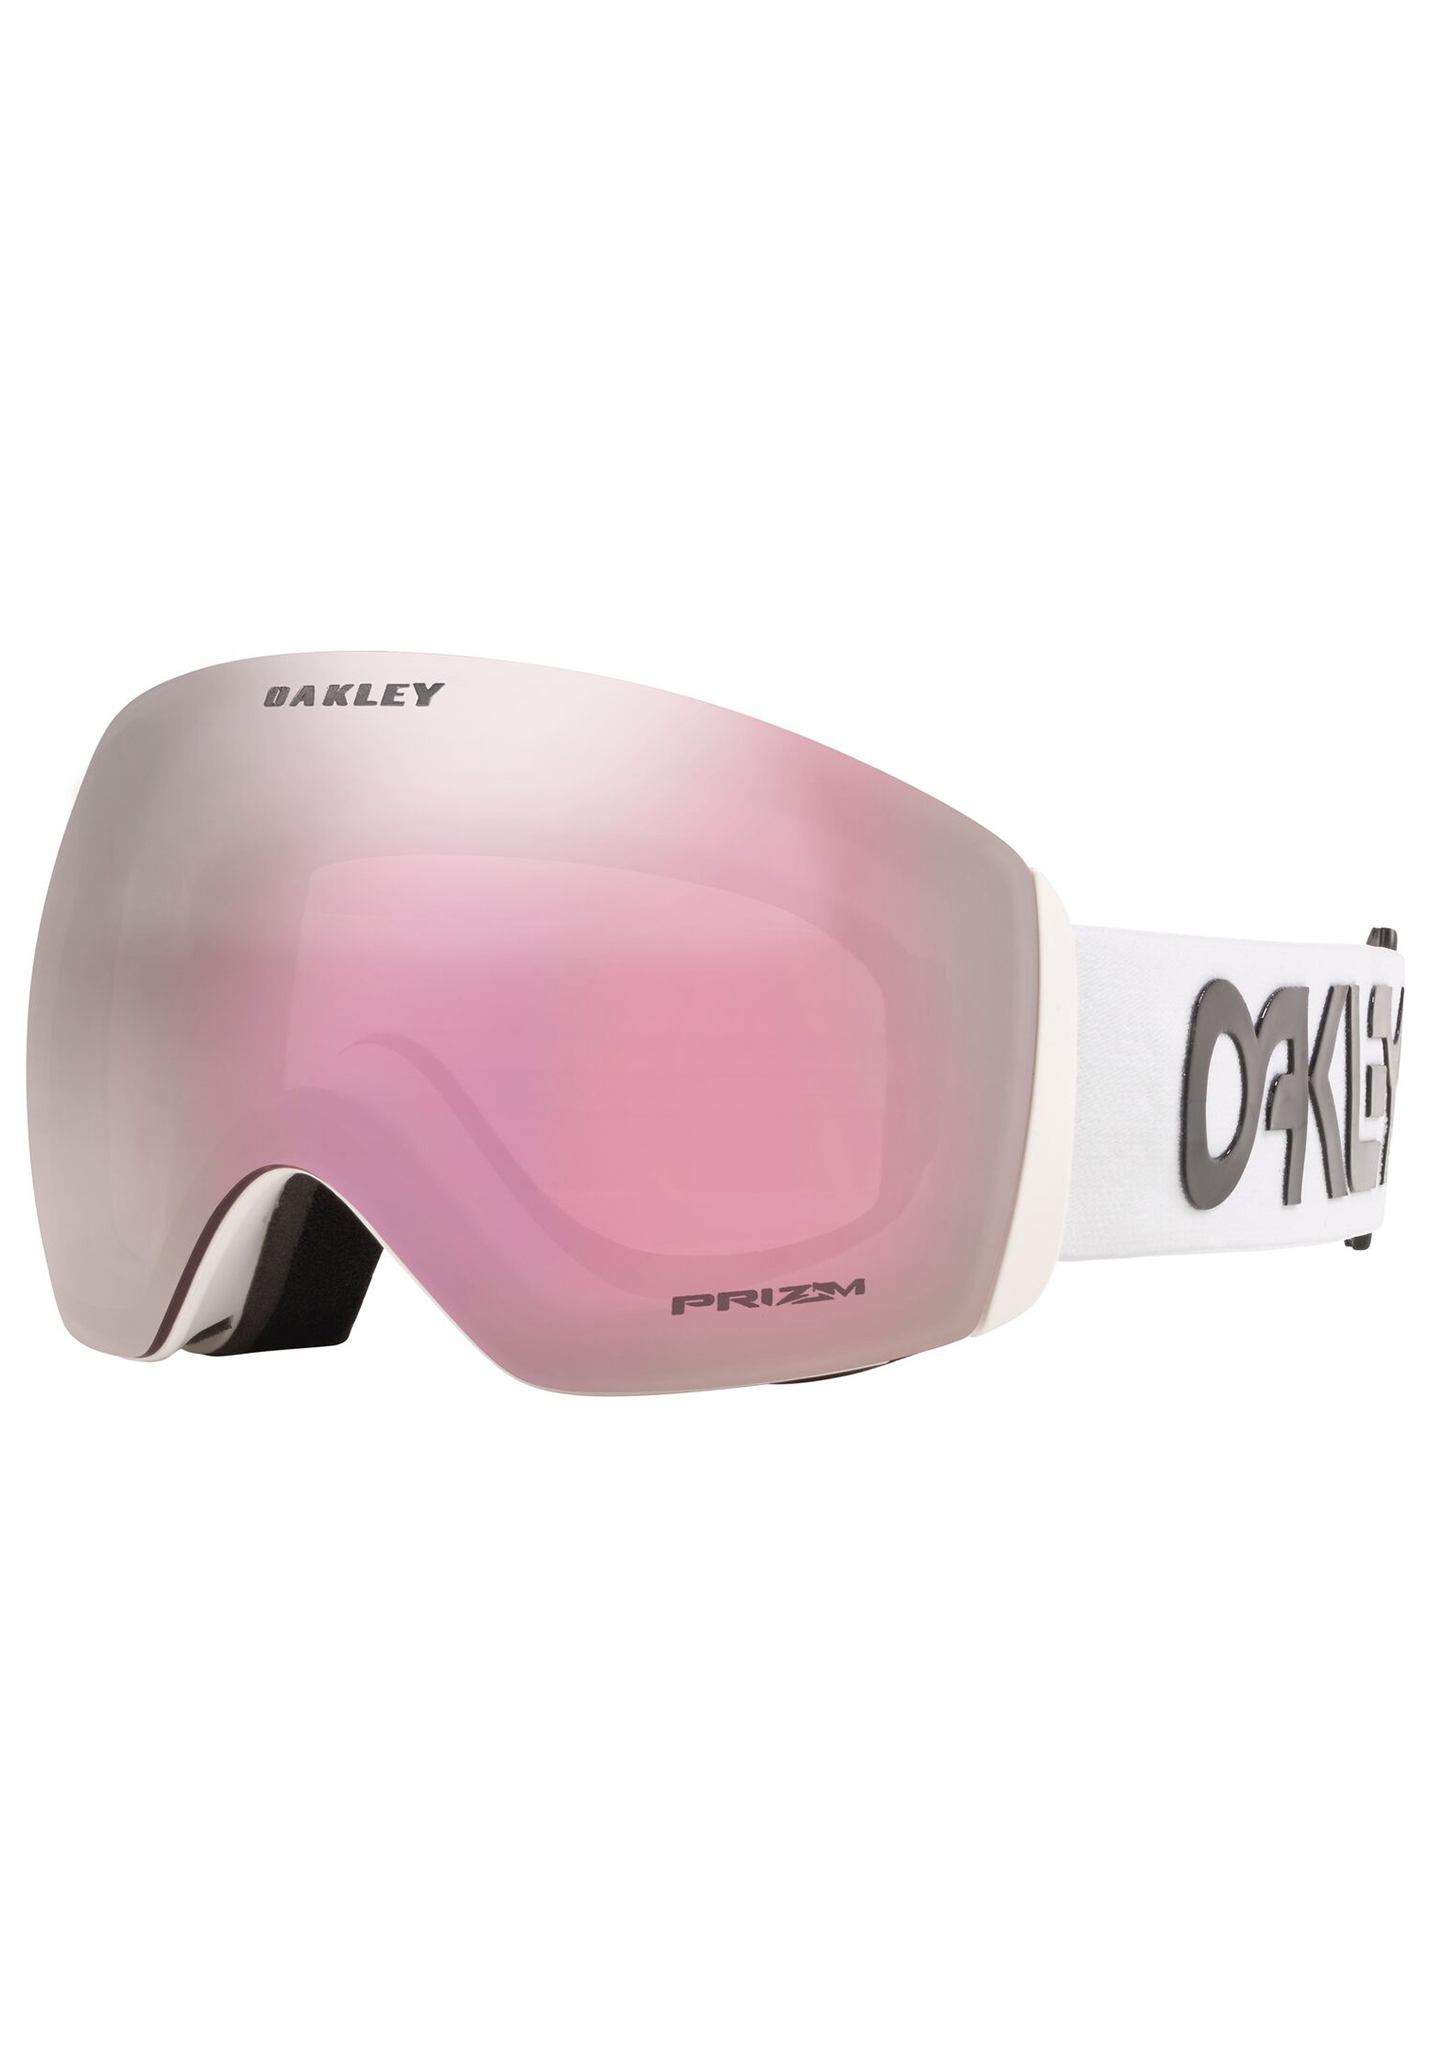 Oakley Flight Deck L Snowboardbrillen rosa/weiß One Size